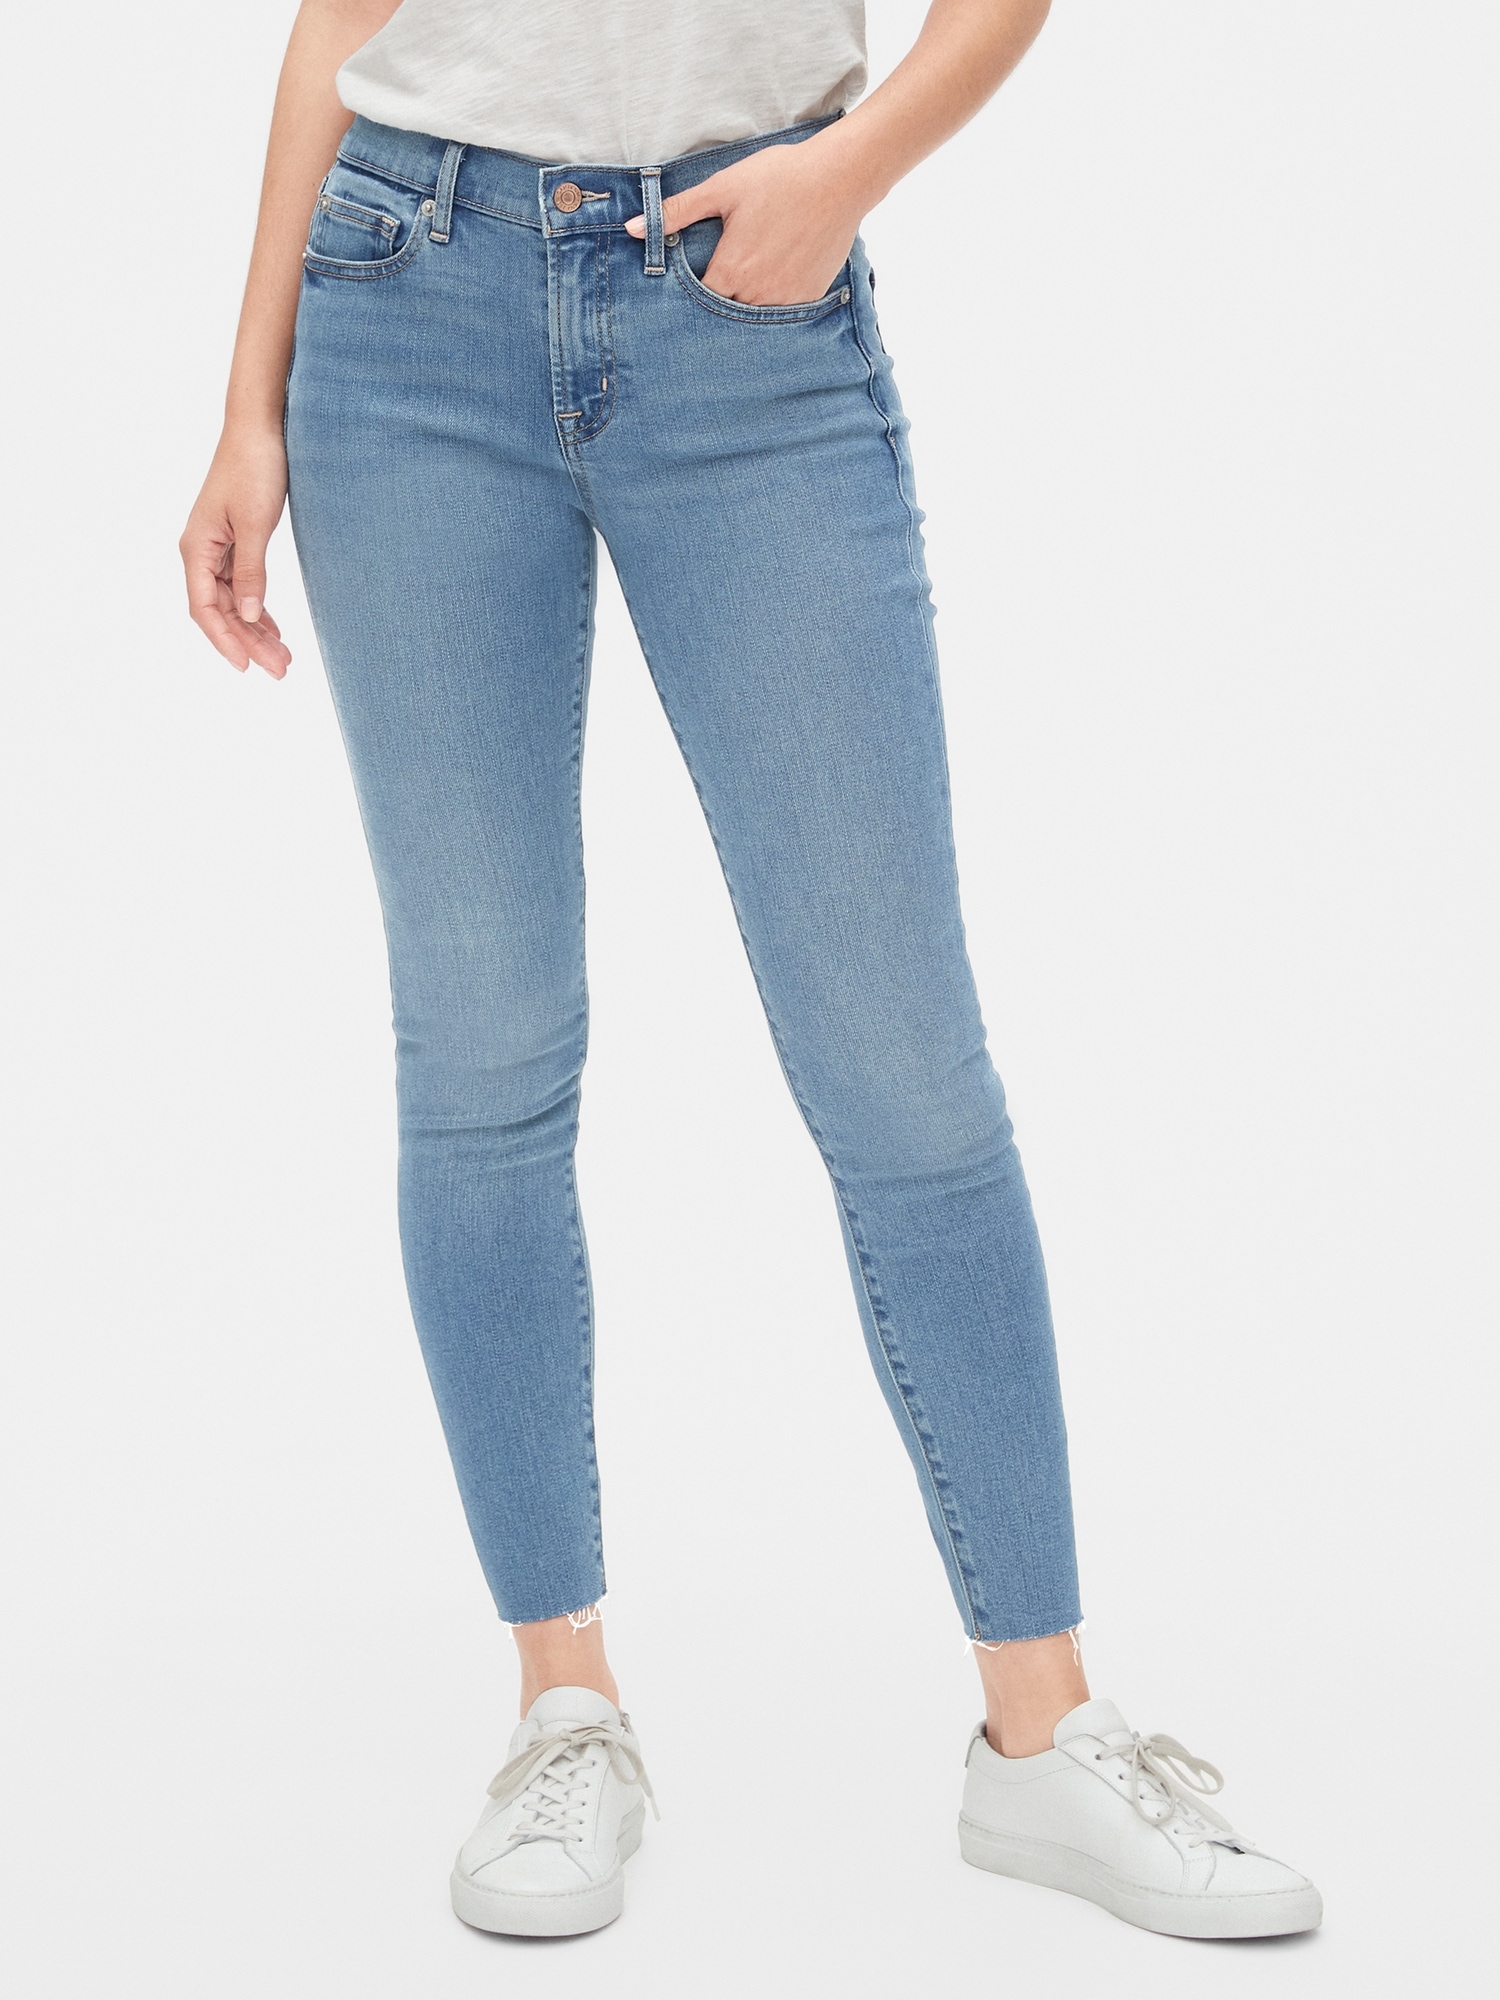 gap low rise true skinny jeans